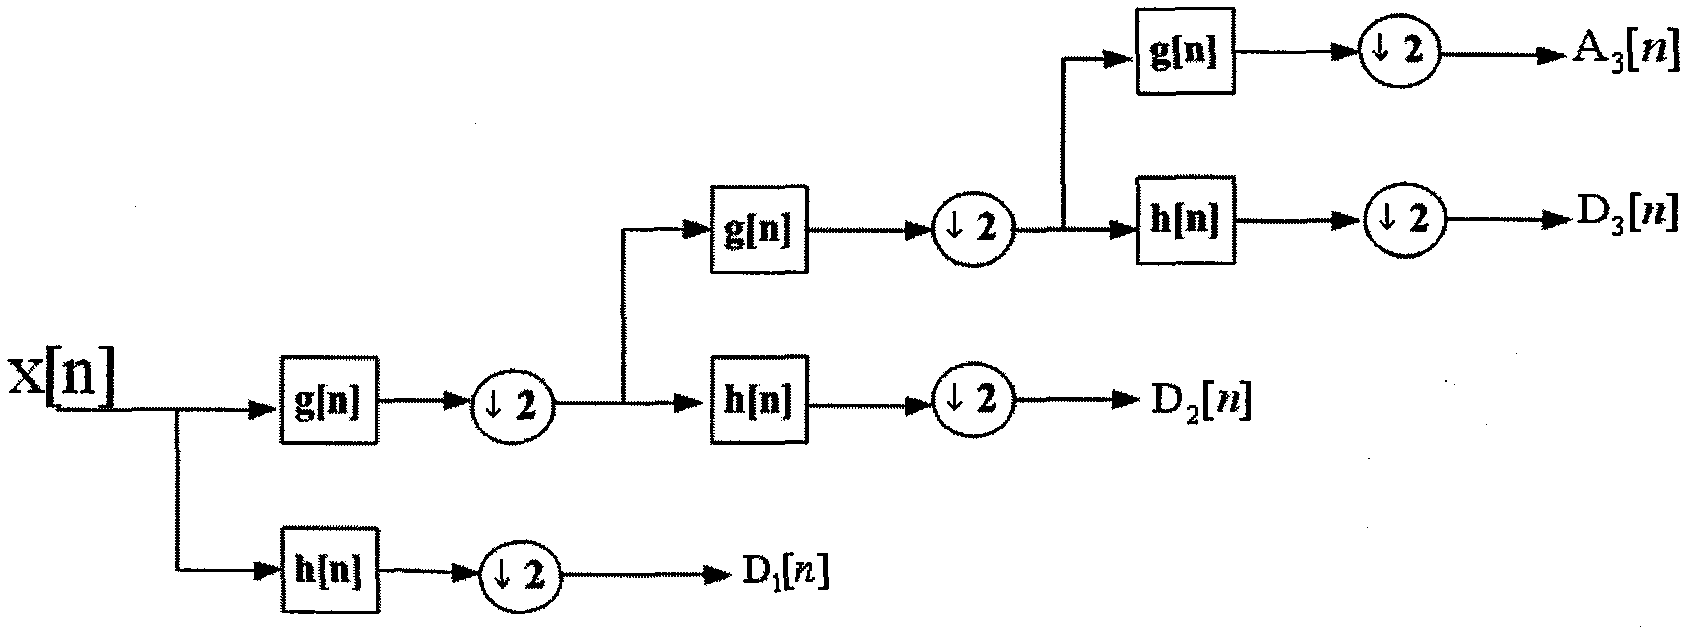 Signal processing method for distributed optical fiber vibration measurement system based on wavelet analysis